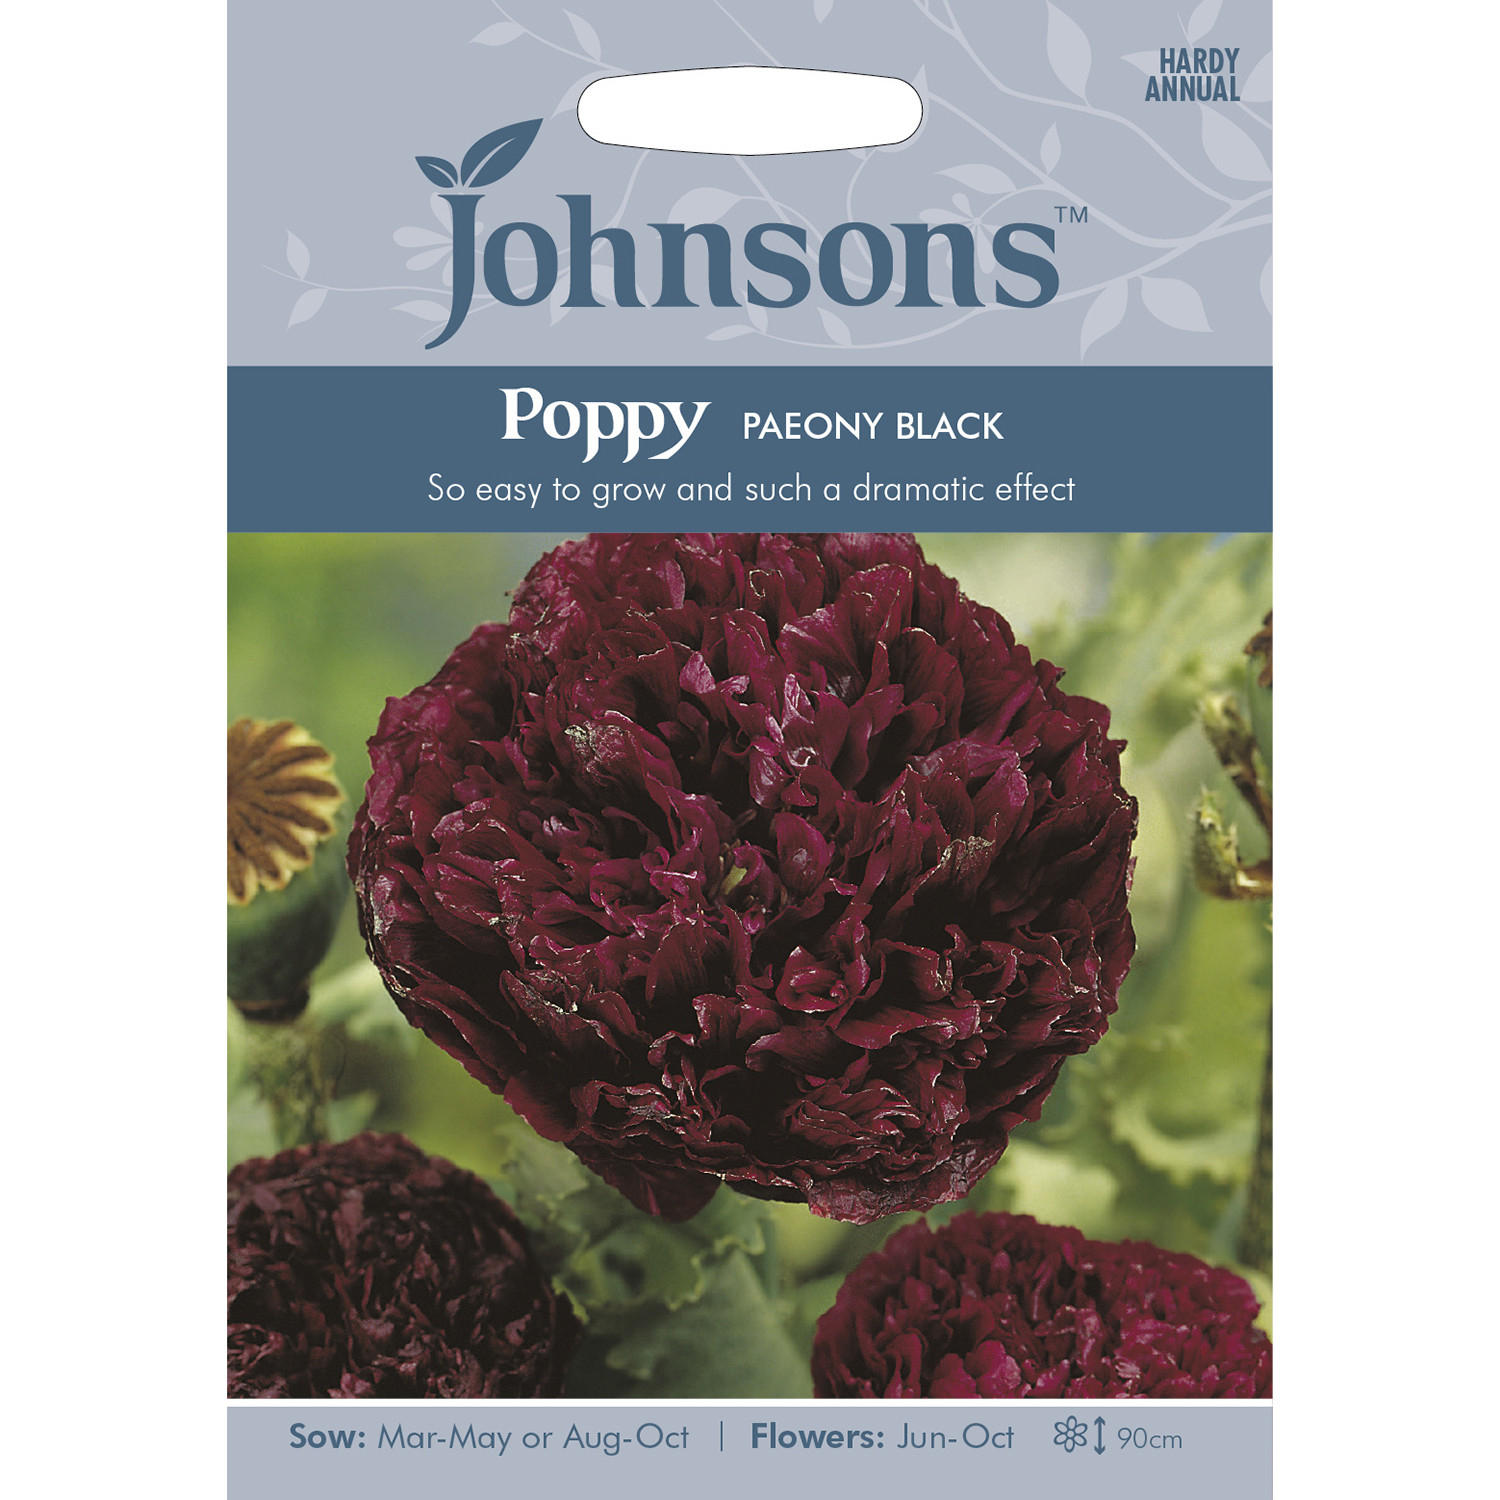 Johnsons Poppy Paeony Black Flower Seeds Image 2